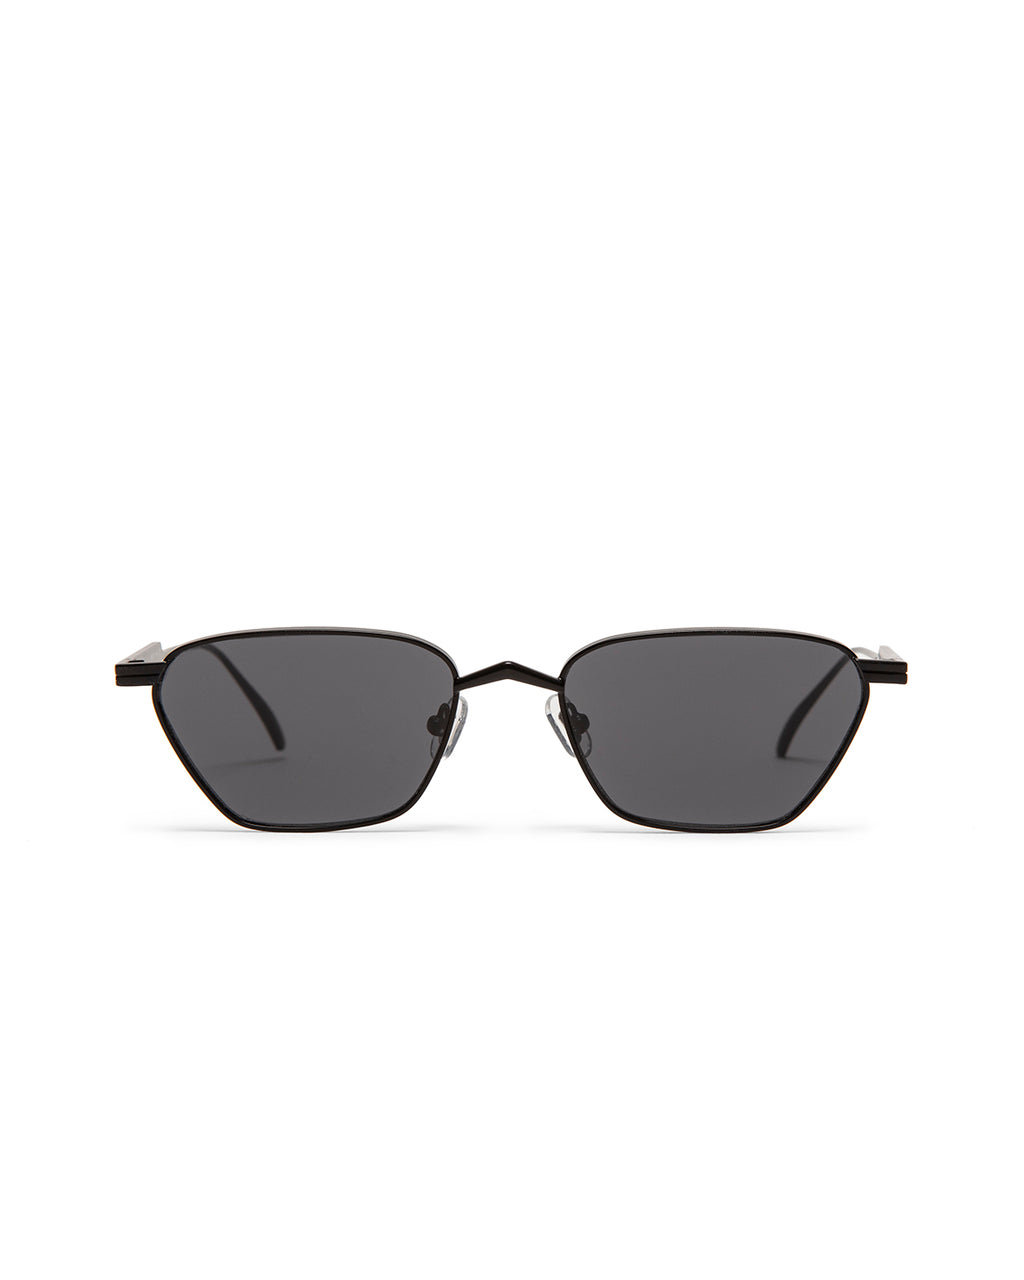 KIWIVISION 2020 Collection NERD Sunglasses unisex